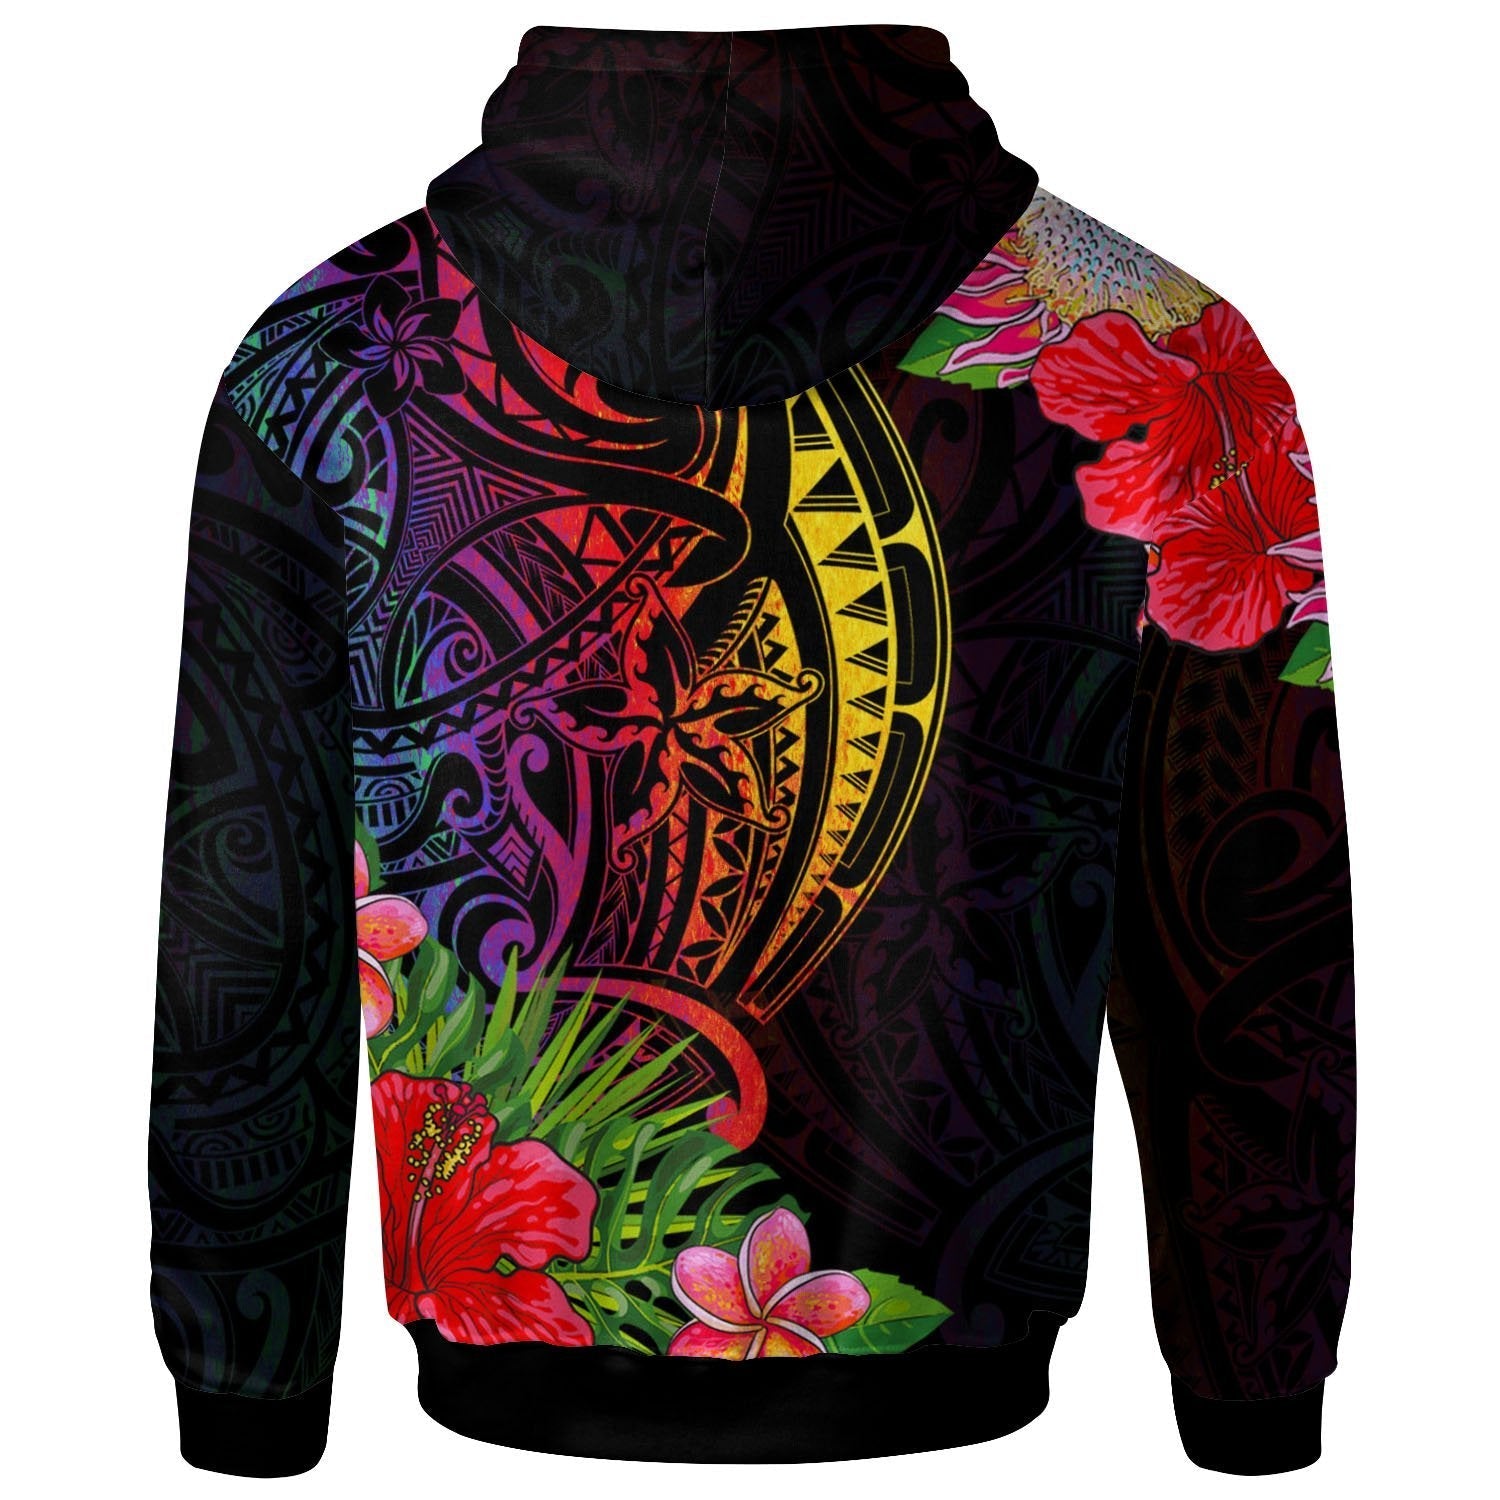 papua-new-guinea-zip-hoodie-tropical-hippie-style